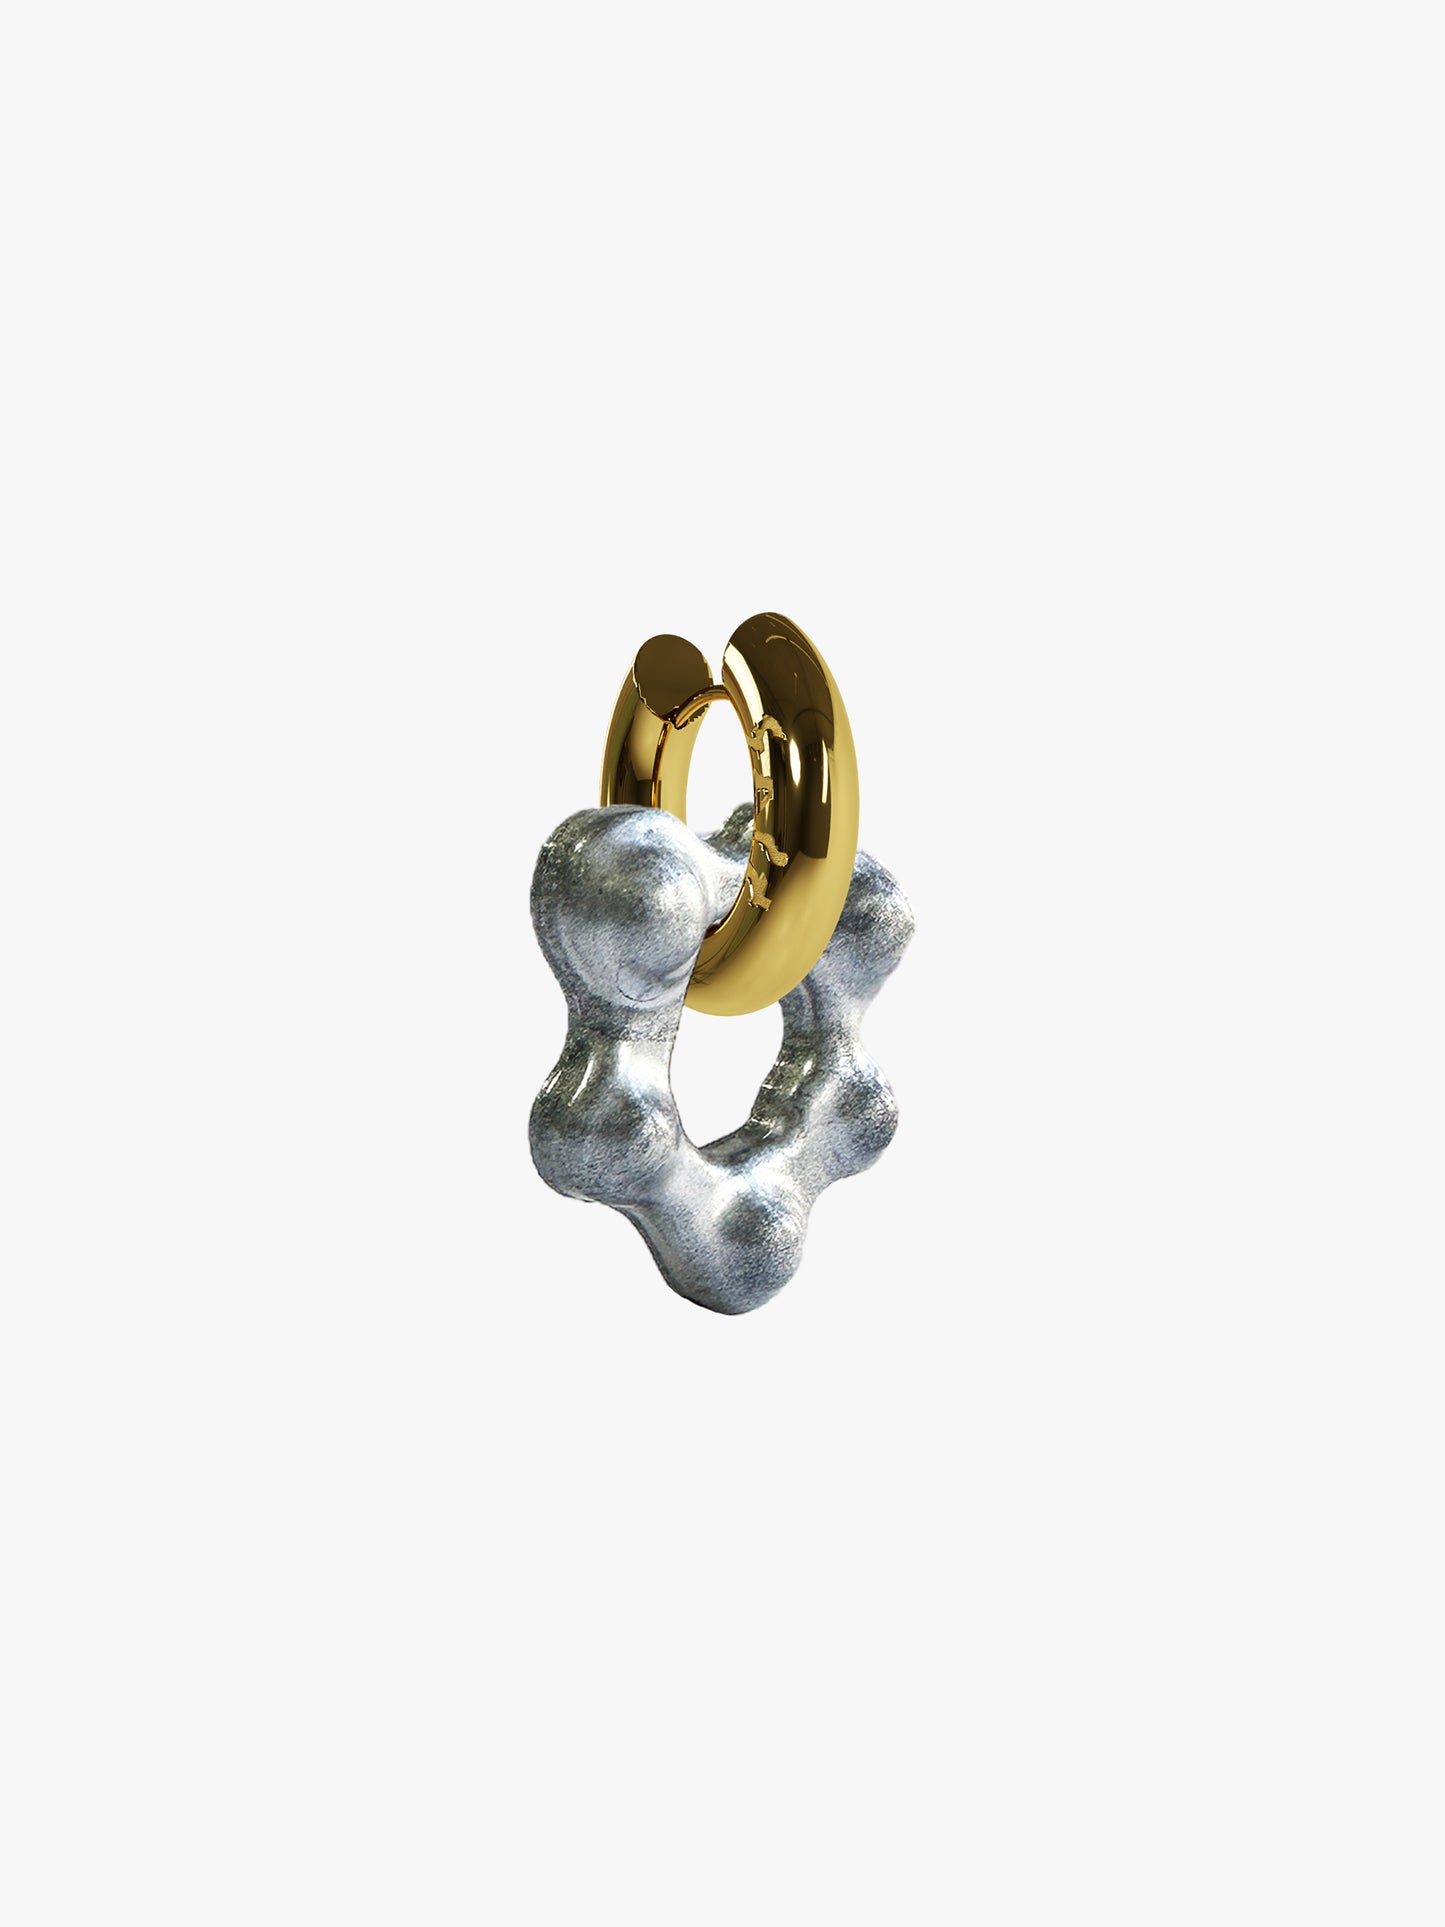 Oyo chrome gold earring (pair)